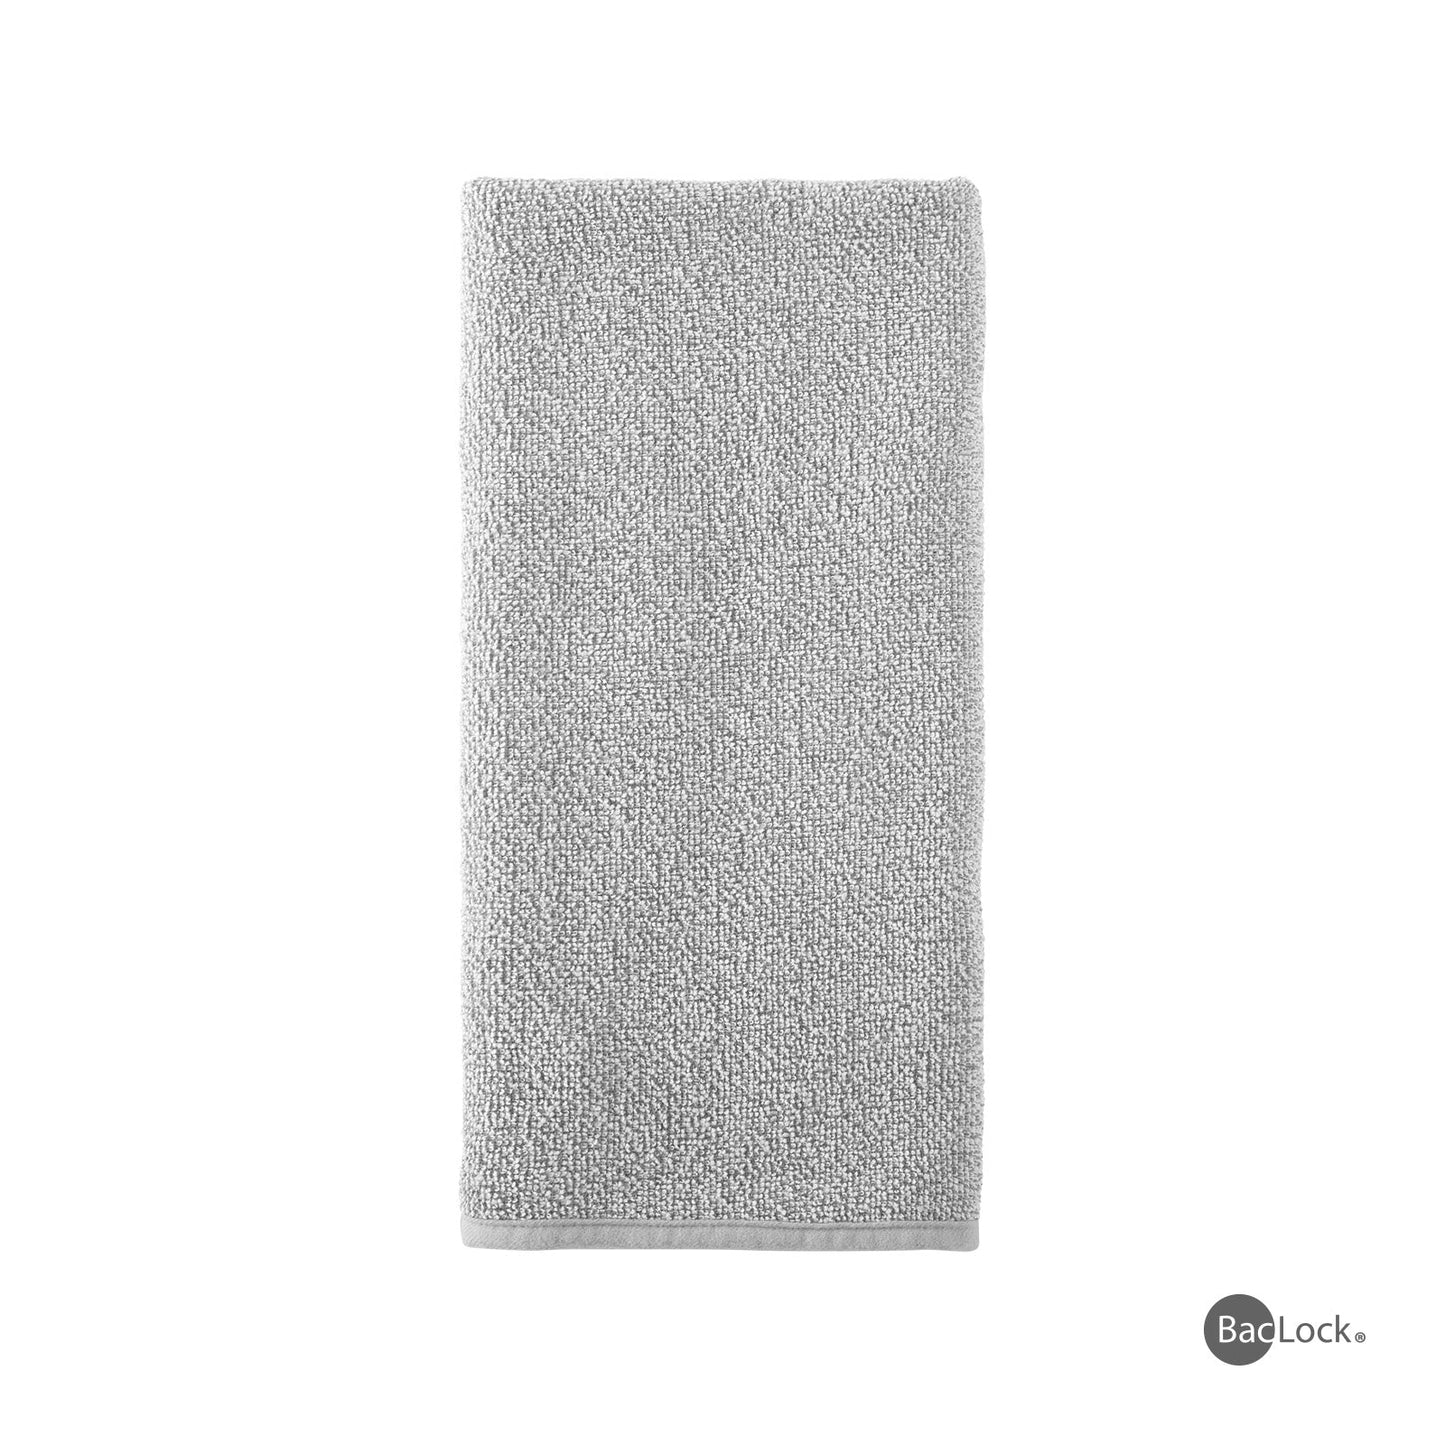 Ultra Plush Hand Towel